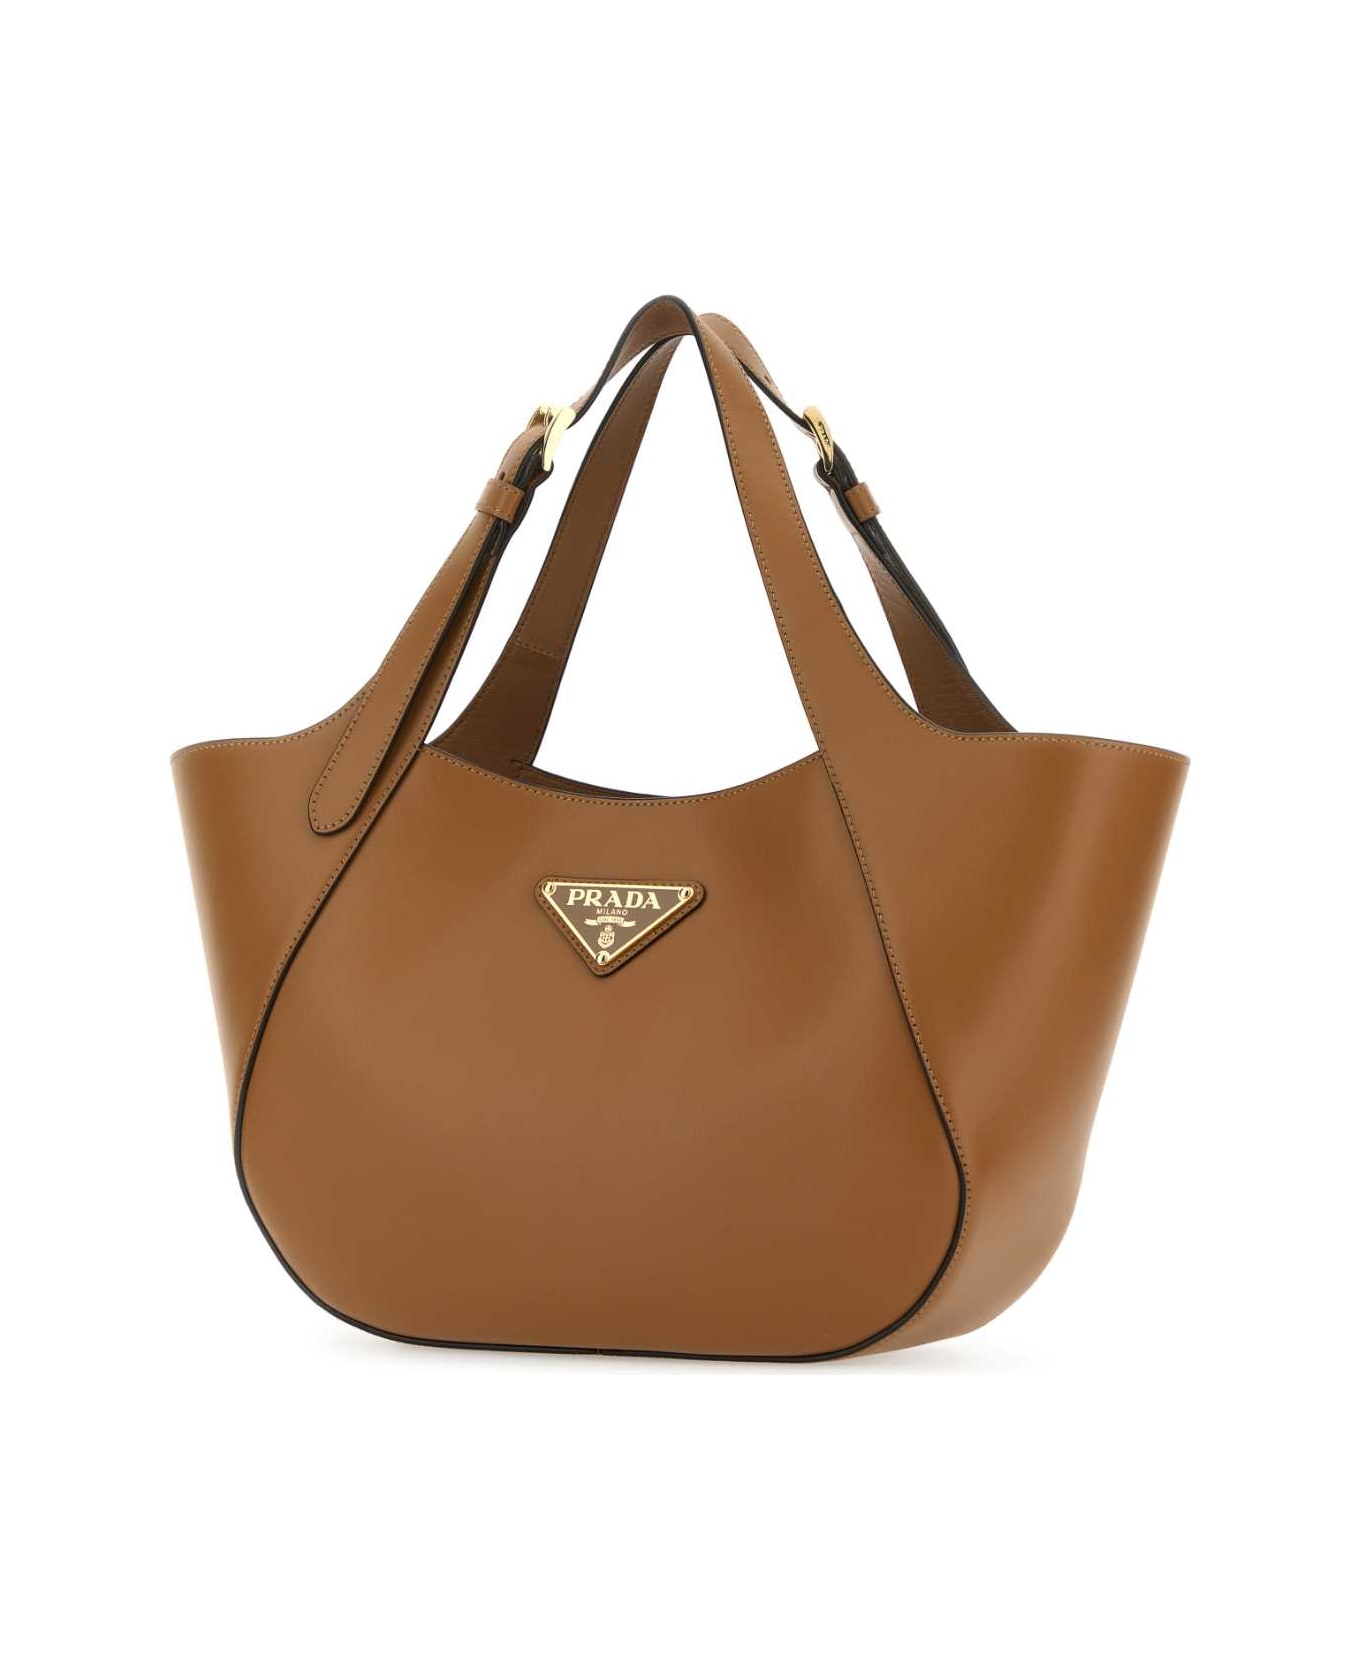 Prada Brown Leather Handbag - CARAMEL0N